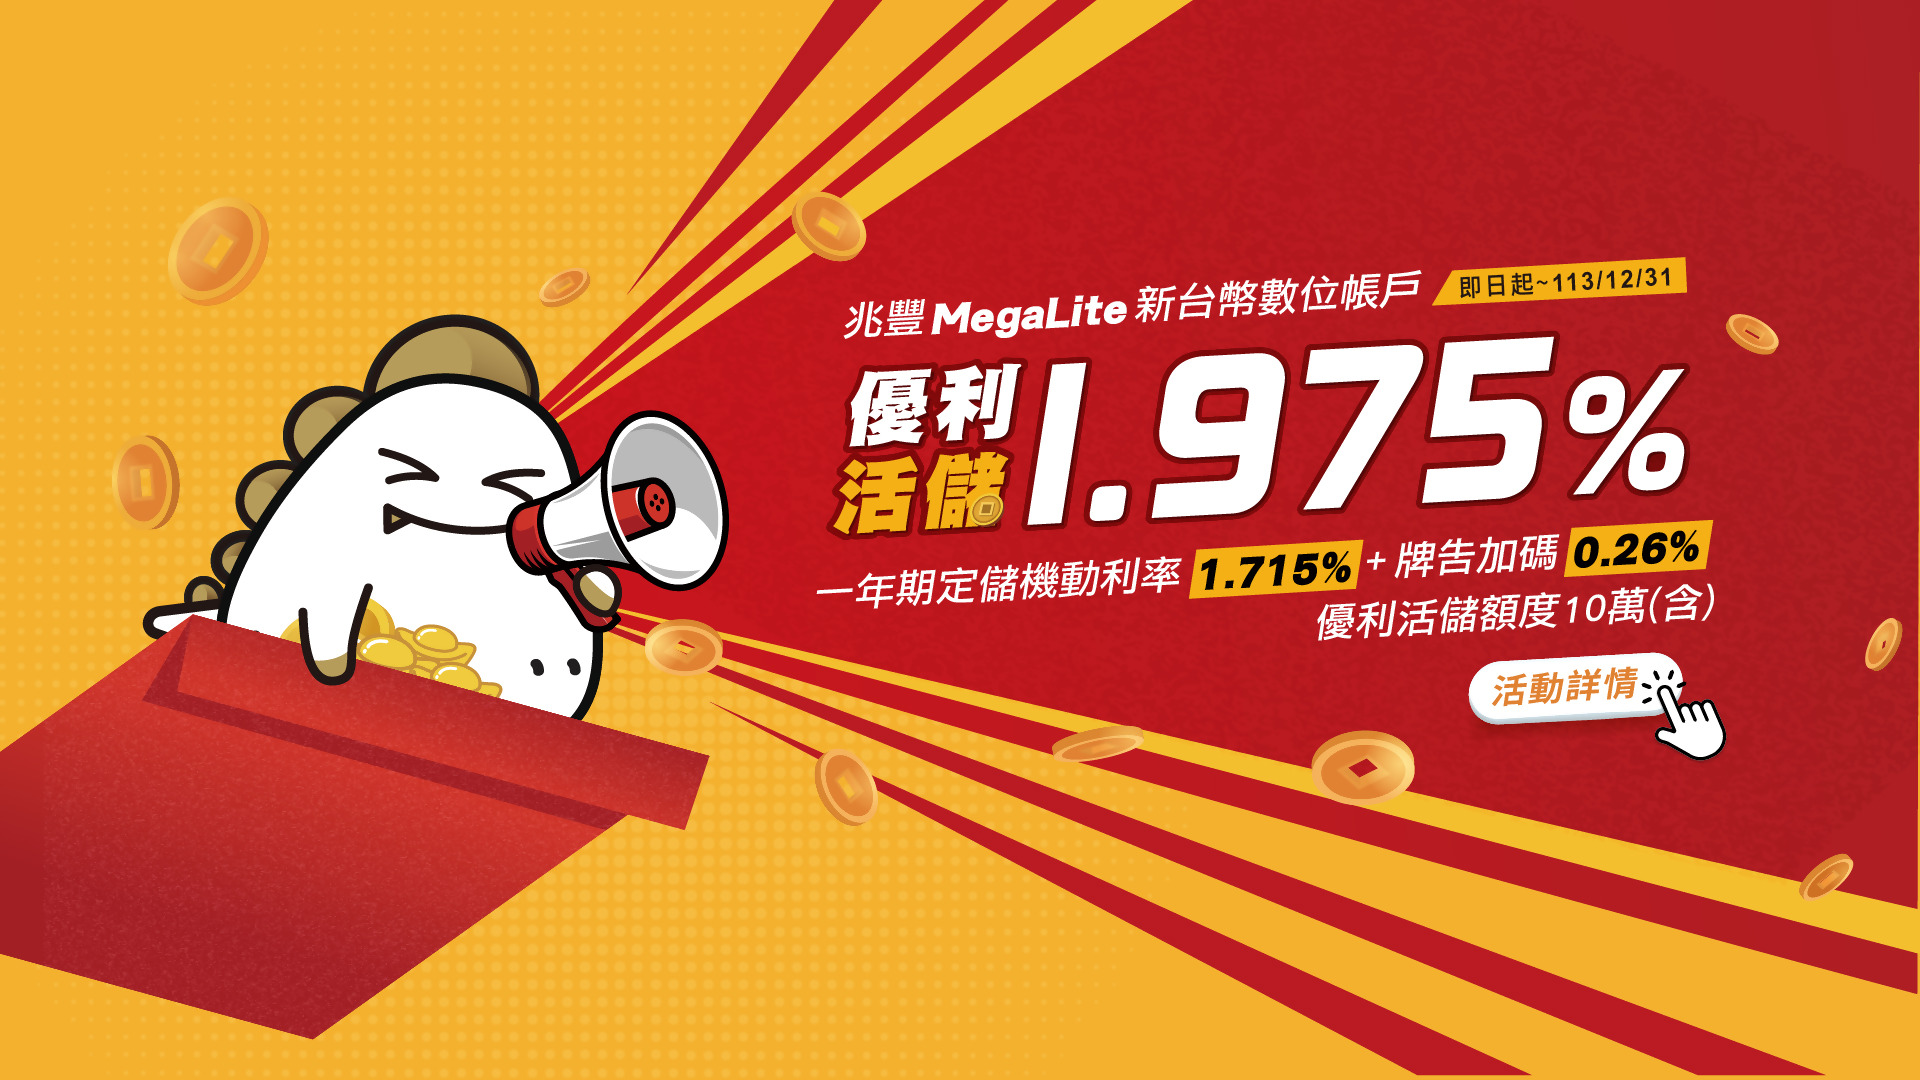 「兆豐MegaLite台幣帳戶優利活儲1.975%!!」Banner